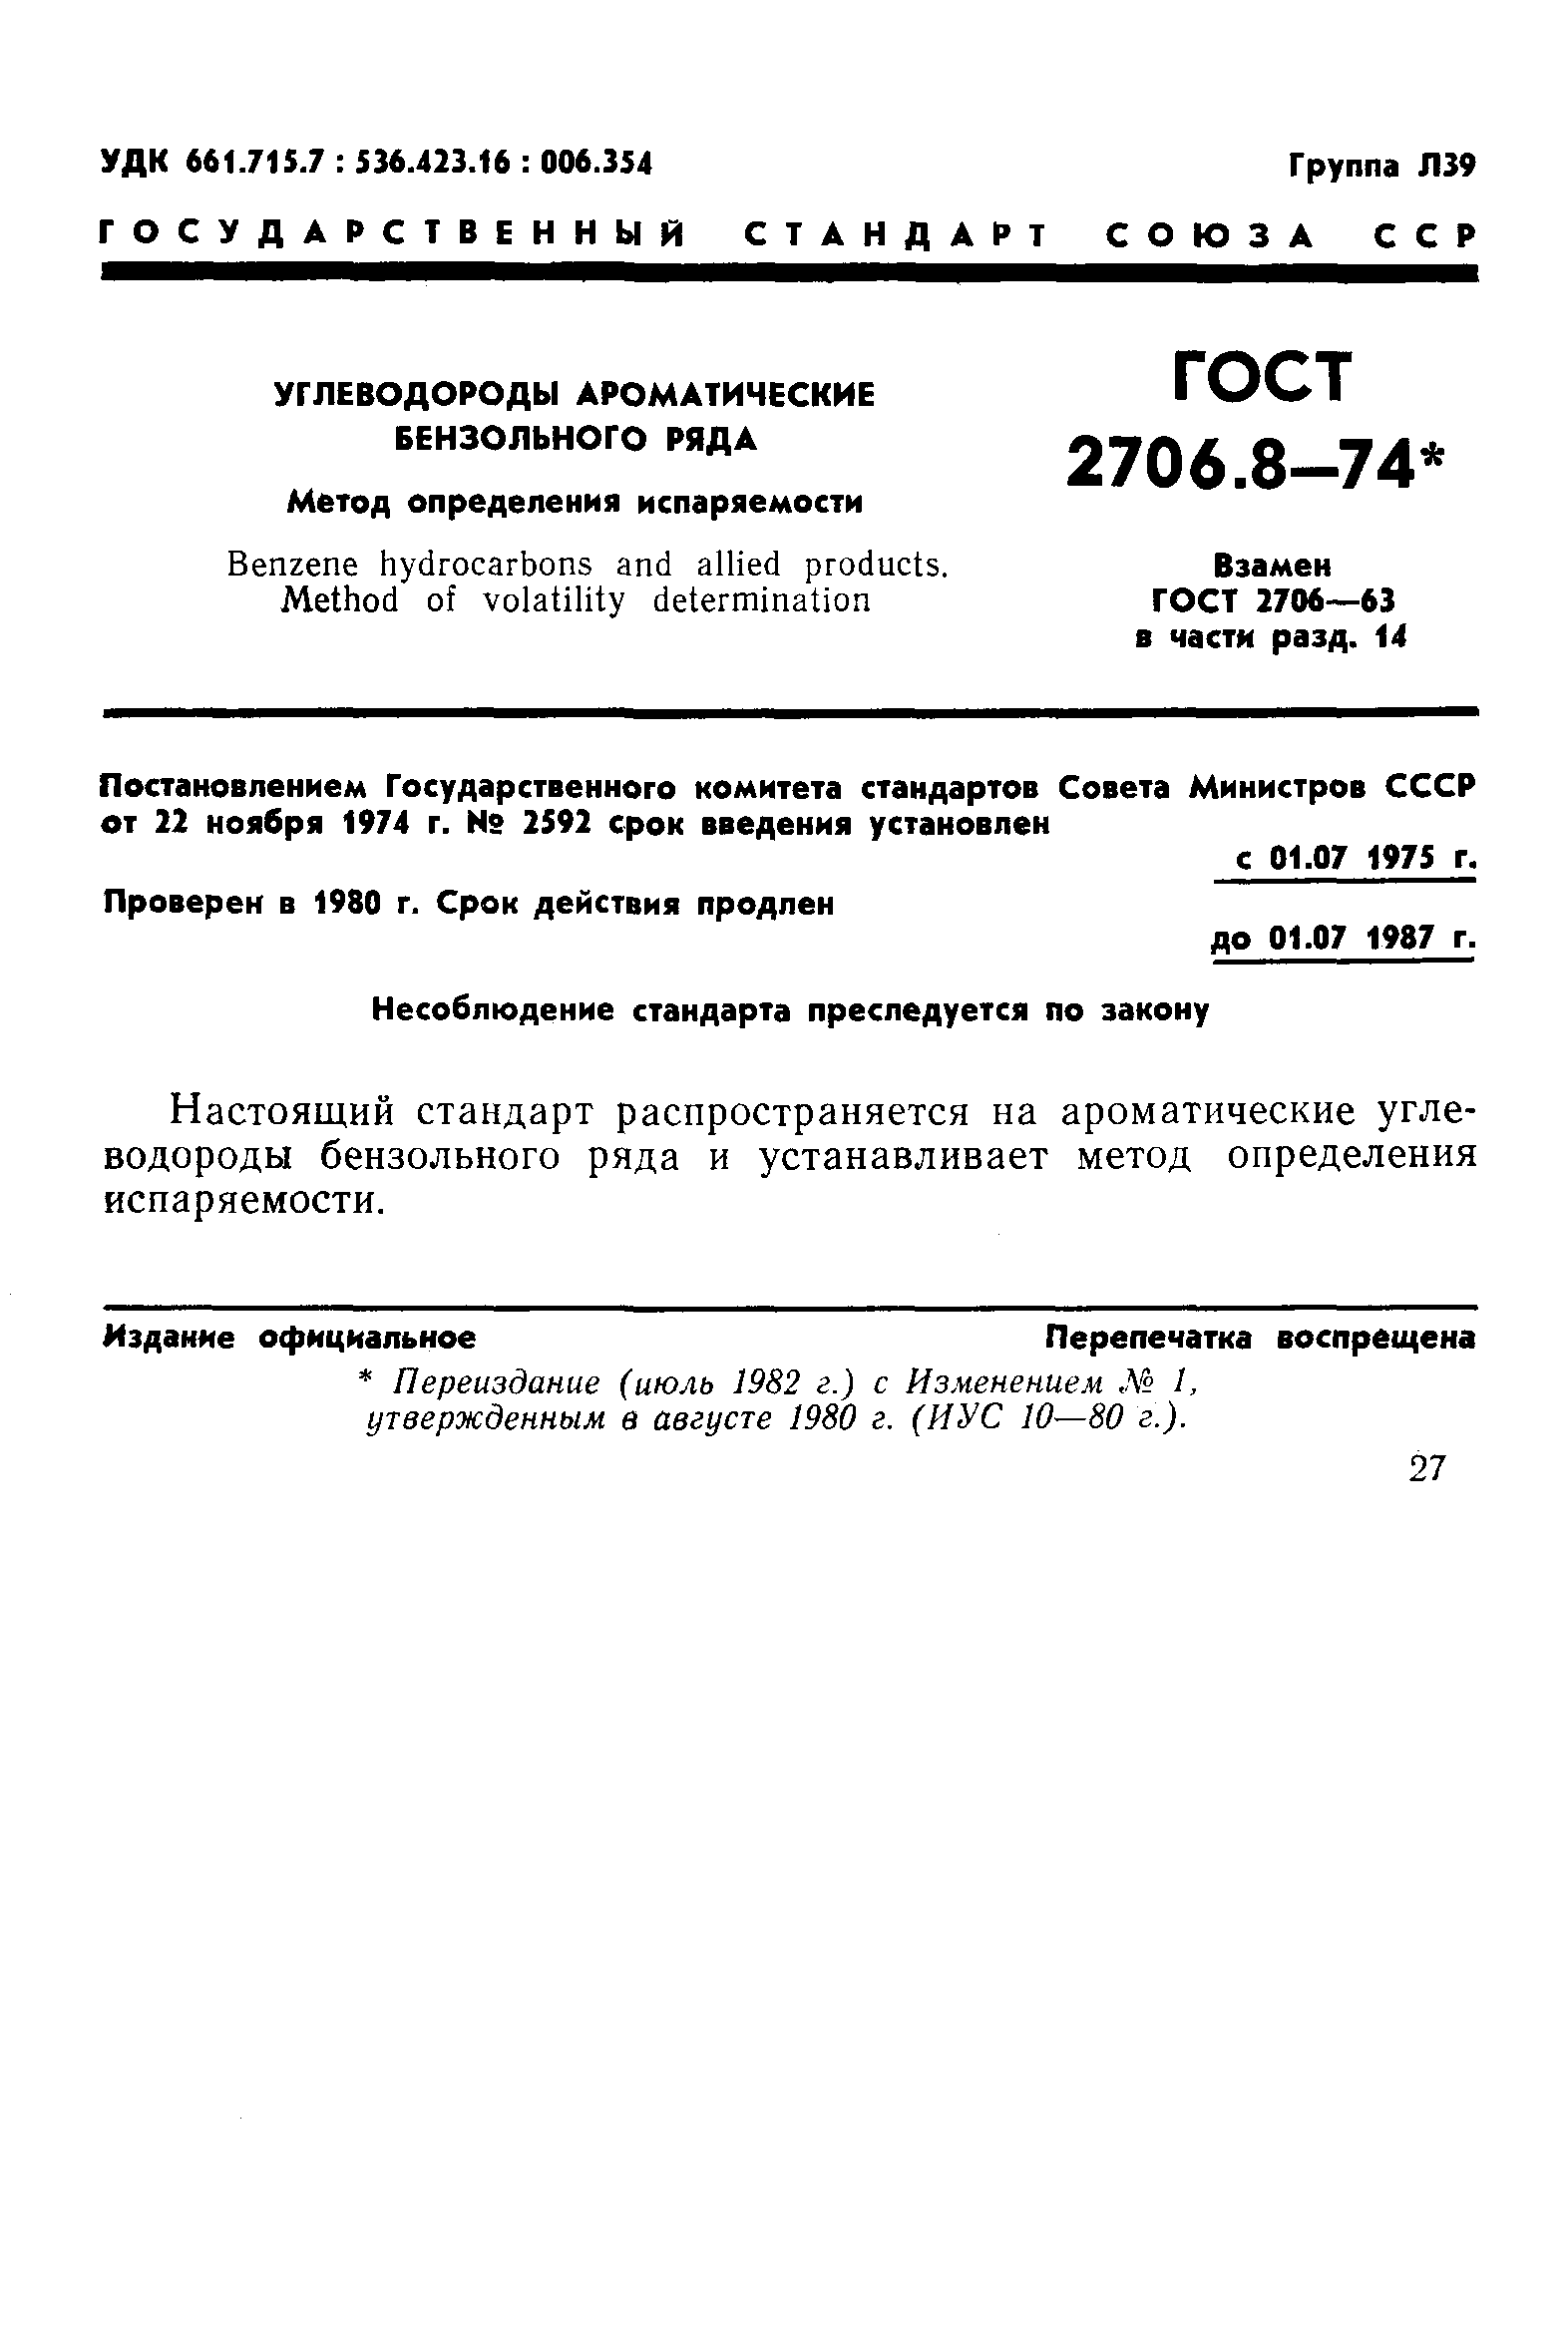 ГОСТ 2706.8-74